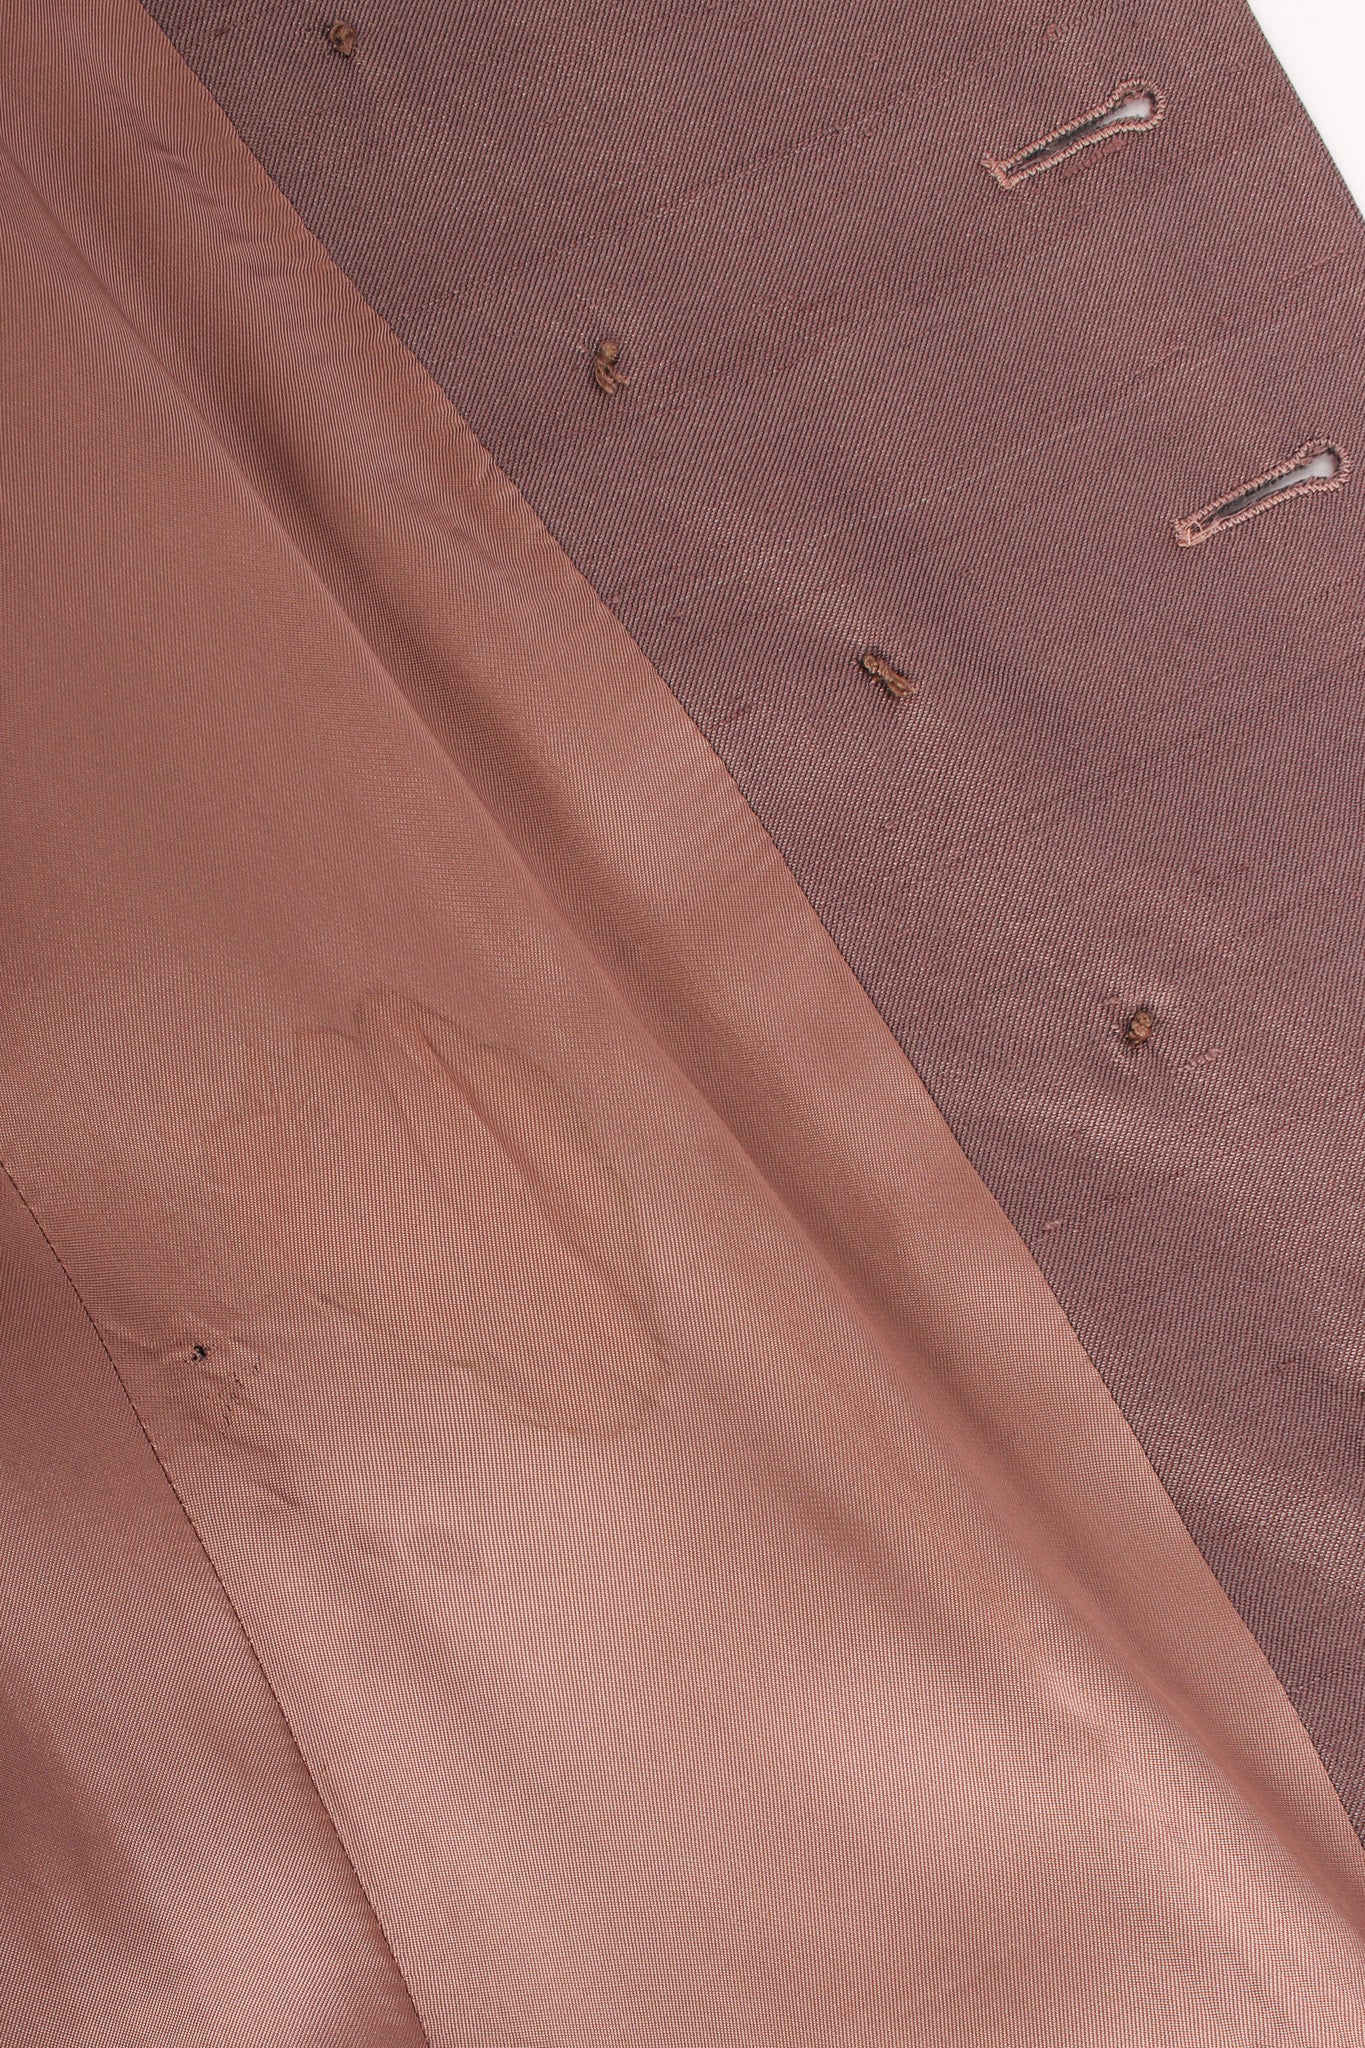 Vintage Dries Van Noten Floral Silk Jacket, Vest, & Skirt Set L jacket lining stain @ Recess LA